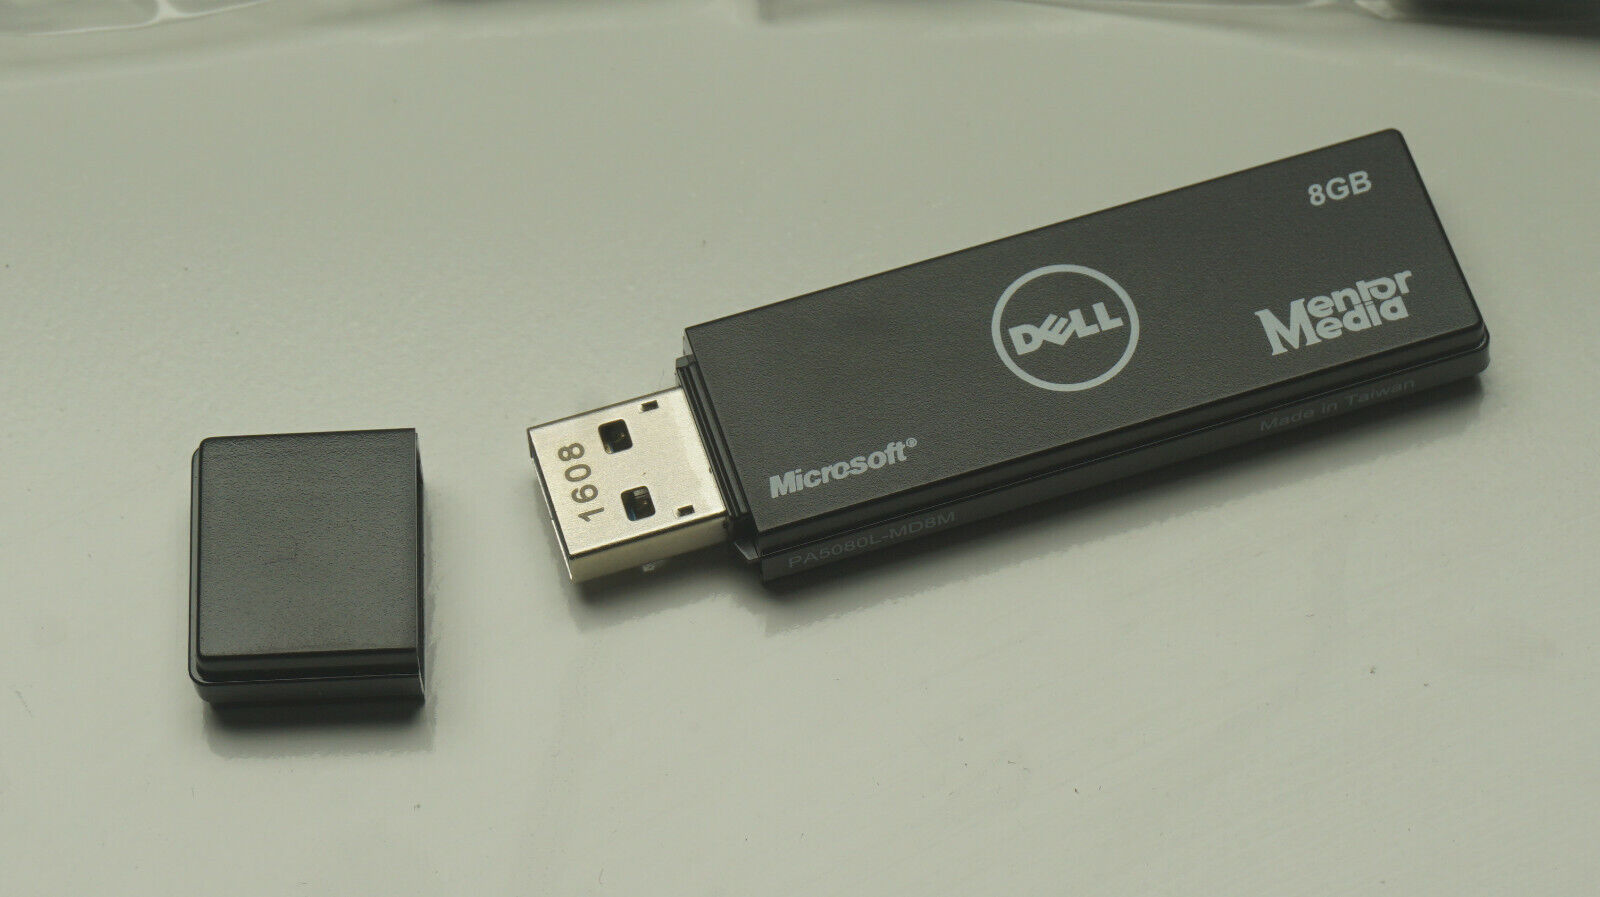 Dell Windows 7 Home Premium SP1, OS Recovery Restore Media USB Stick 8GB, 64Bits